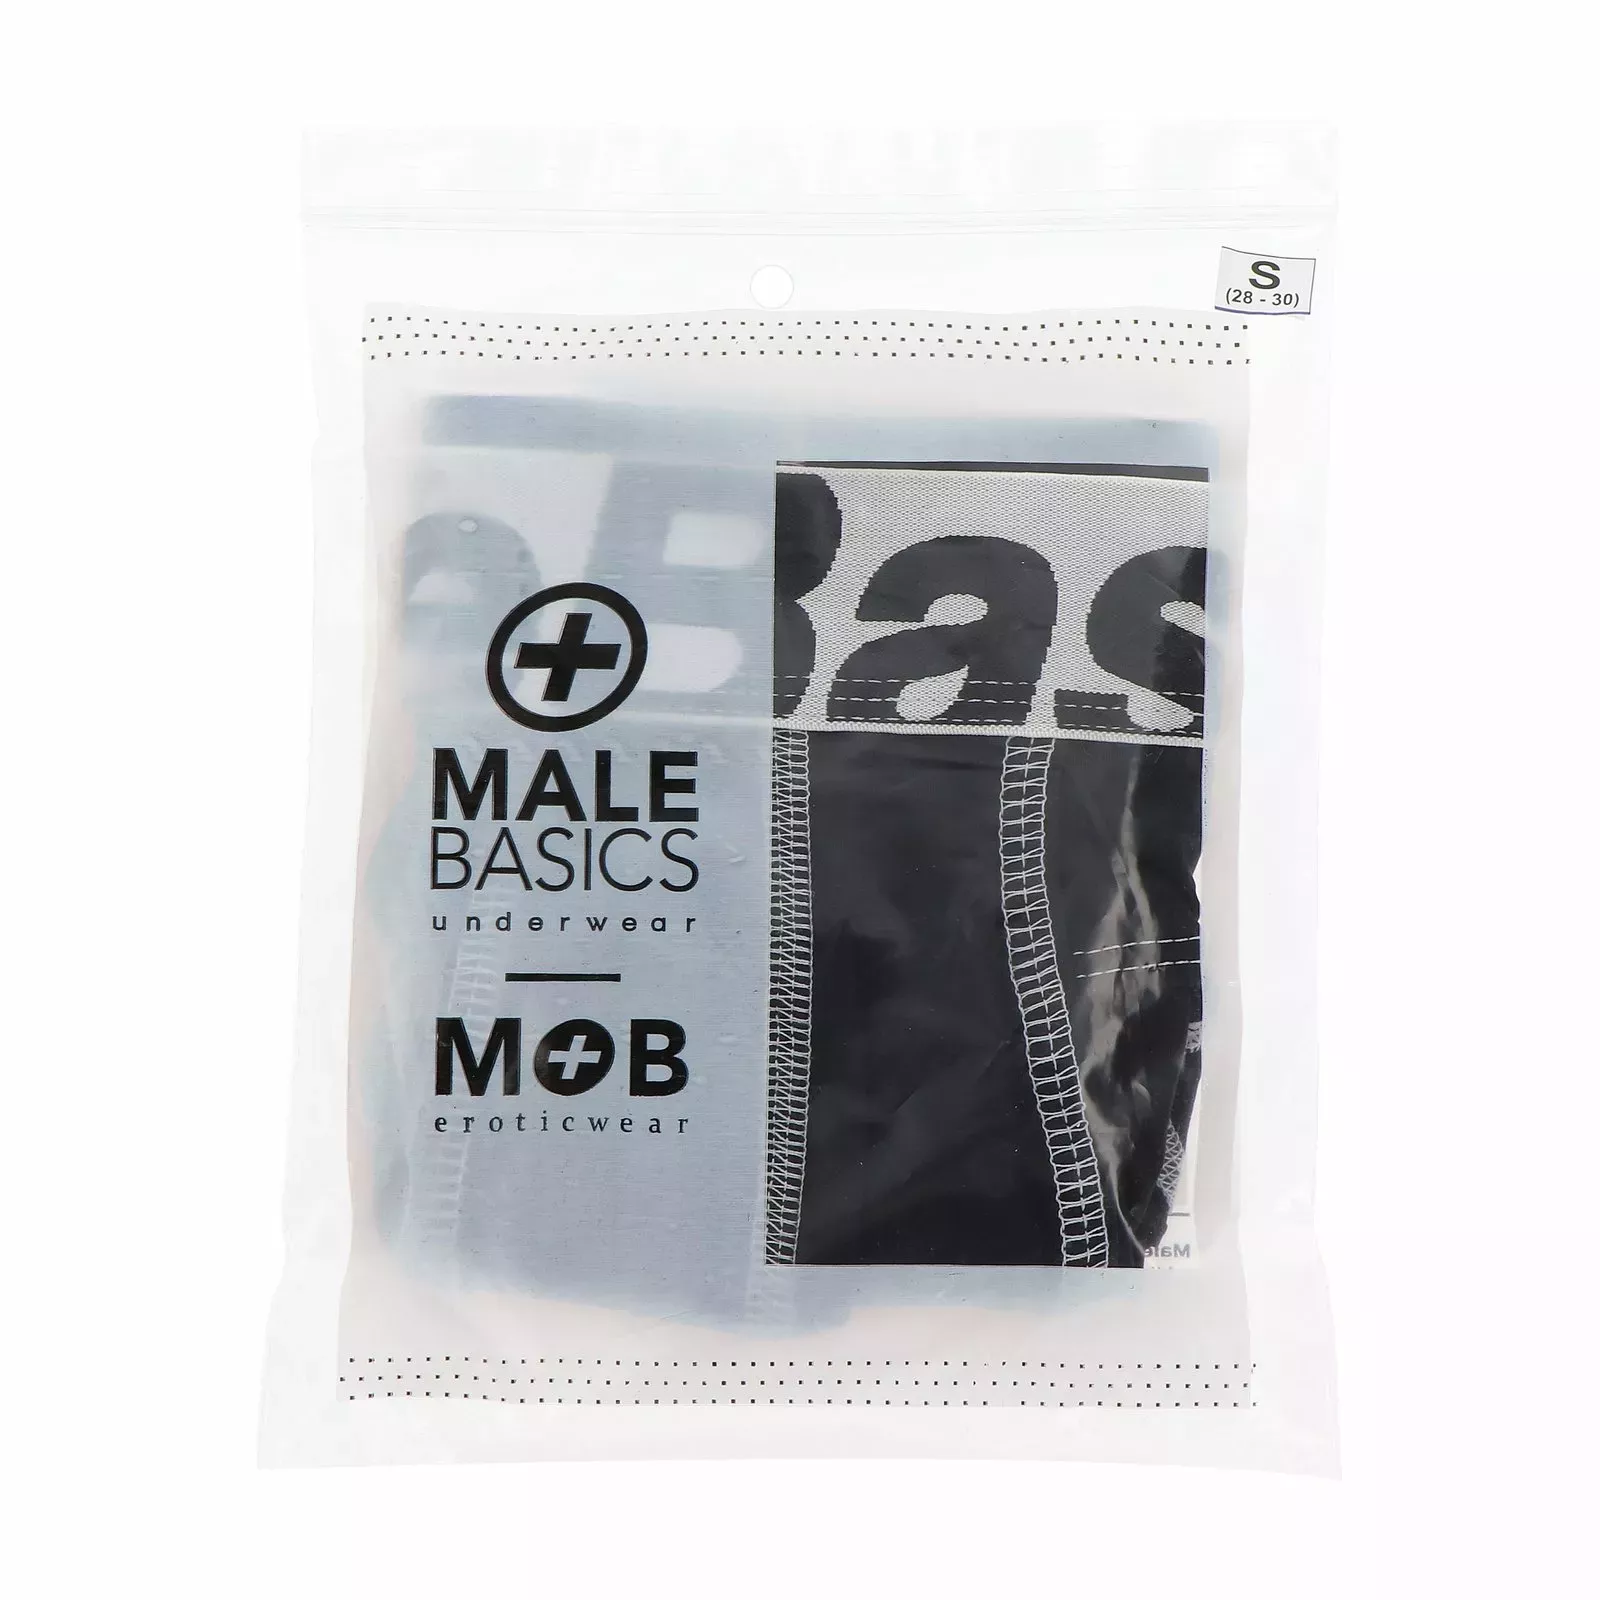 mob eroticwear 81328 Photo 2